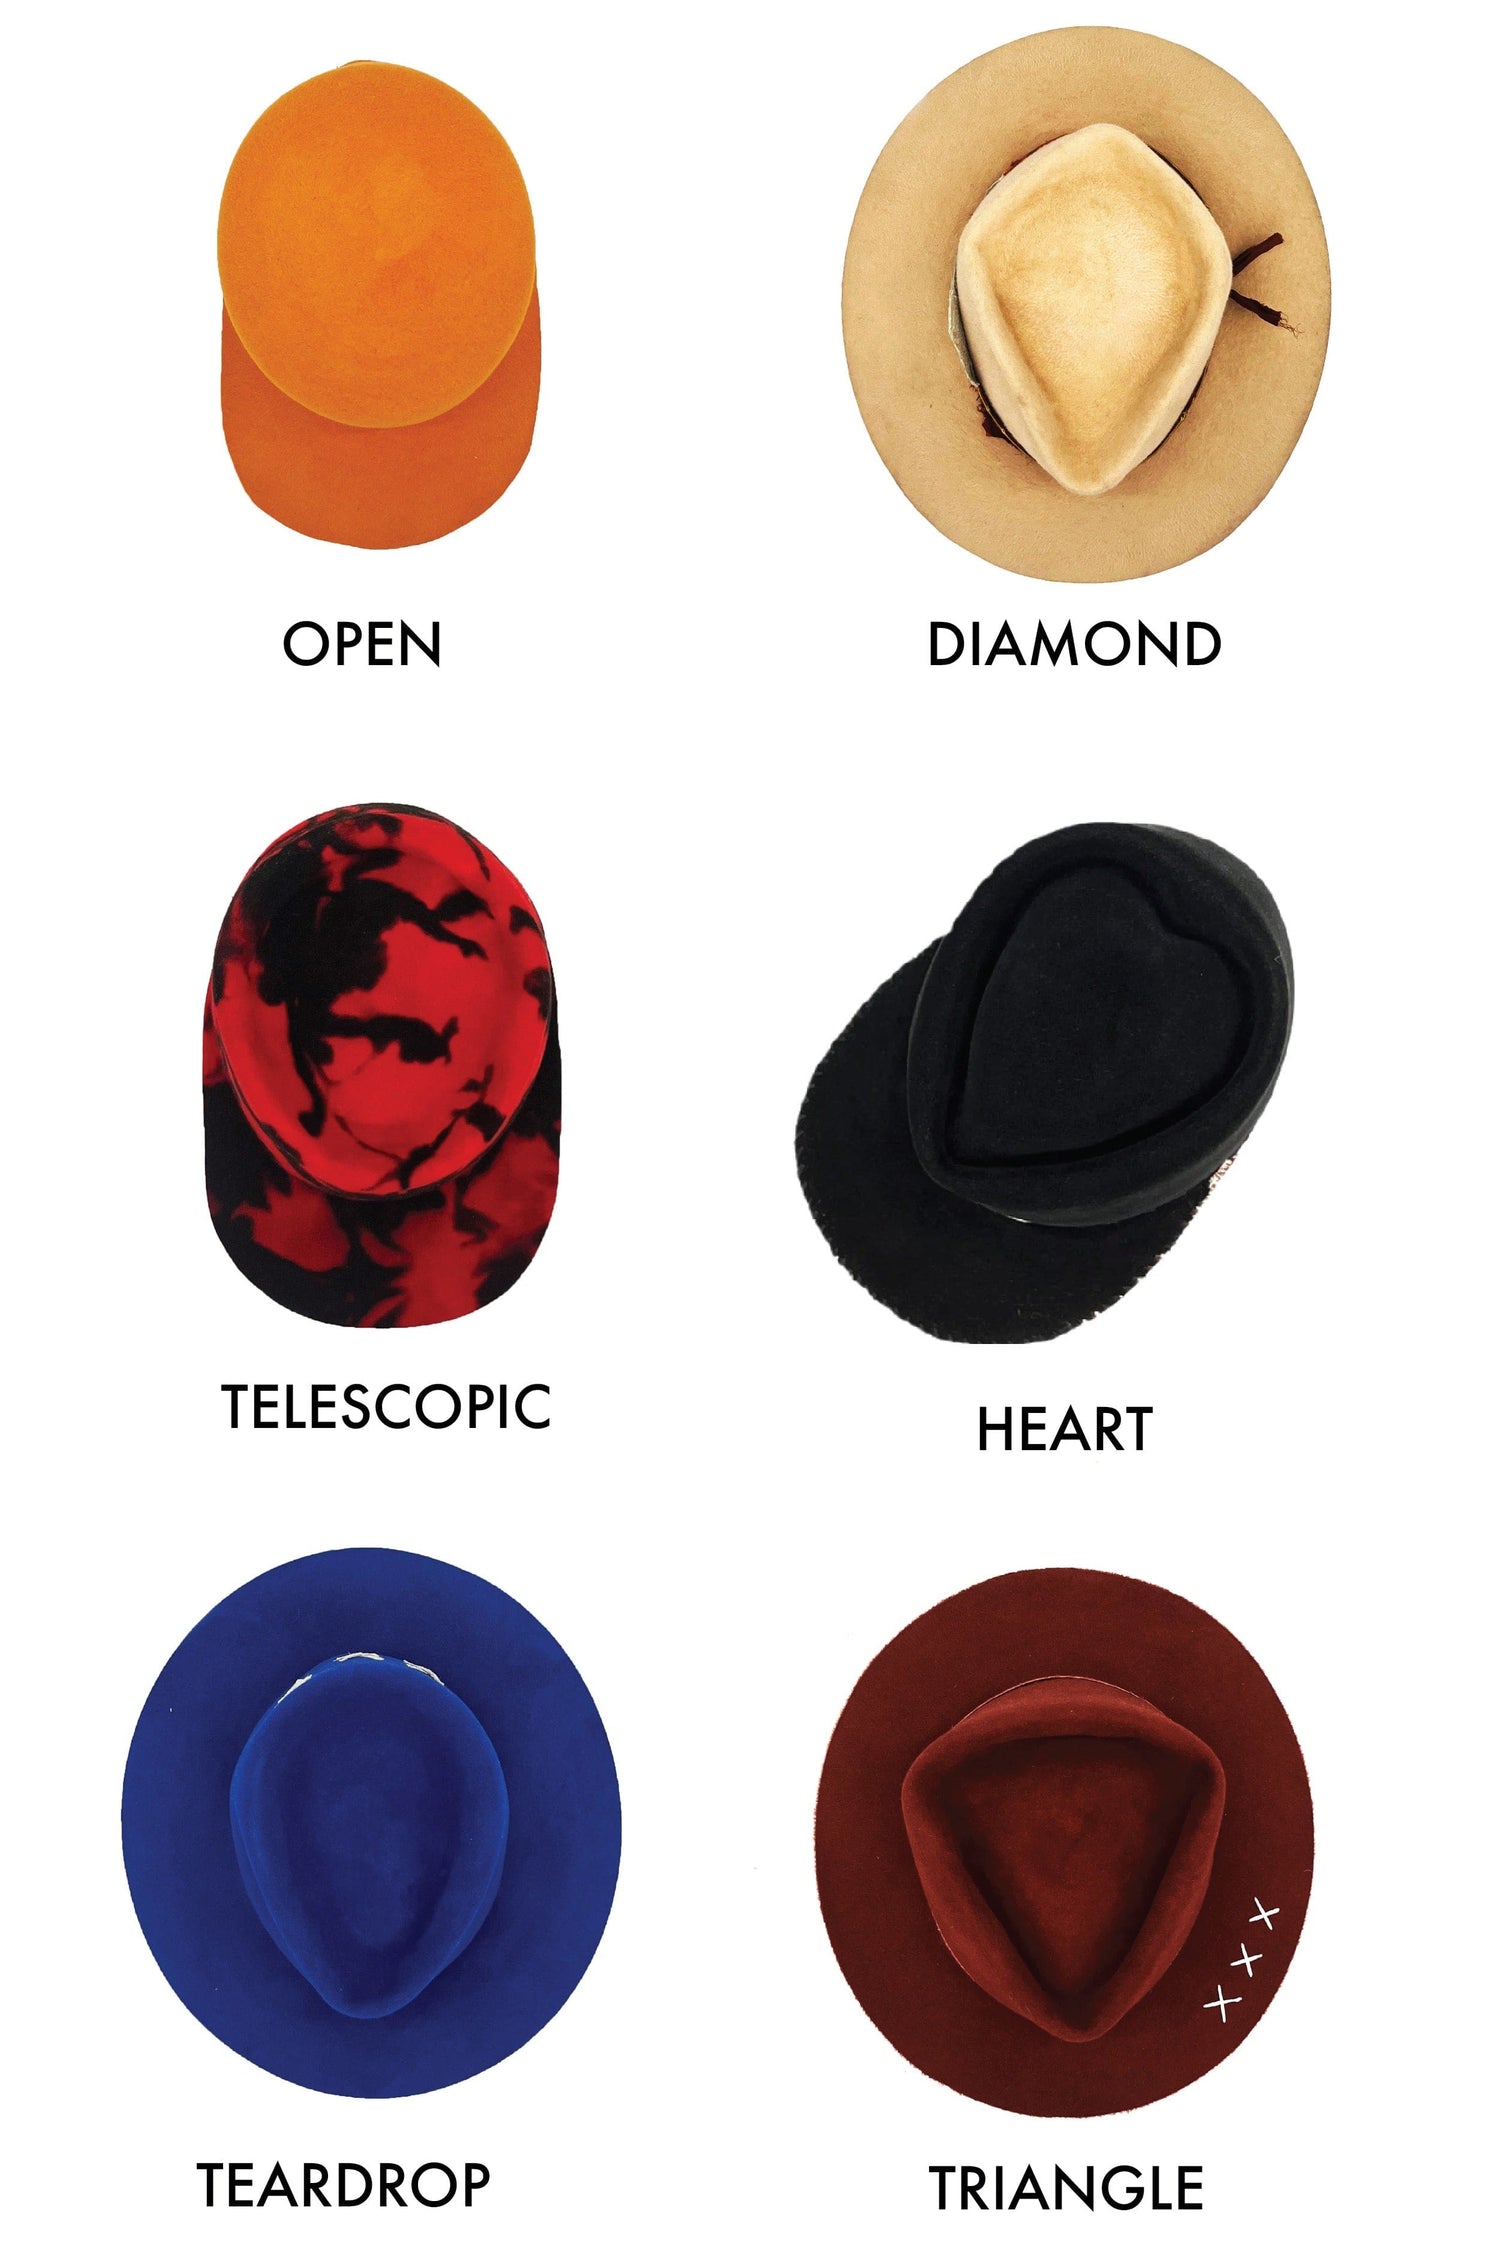 Designer Beanies, Men's Hats